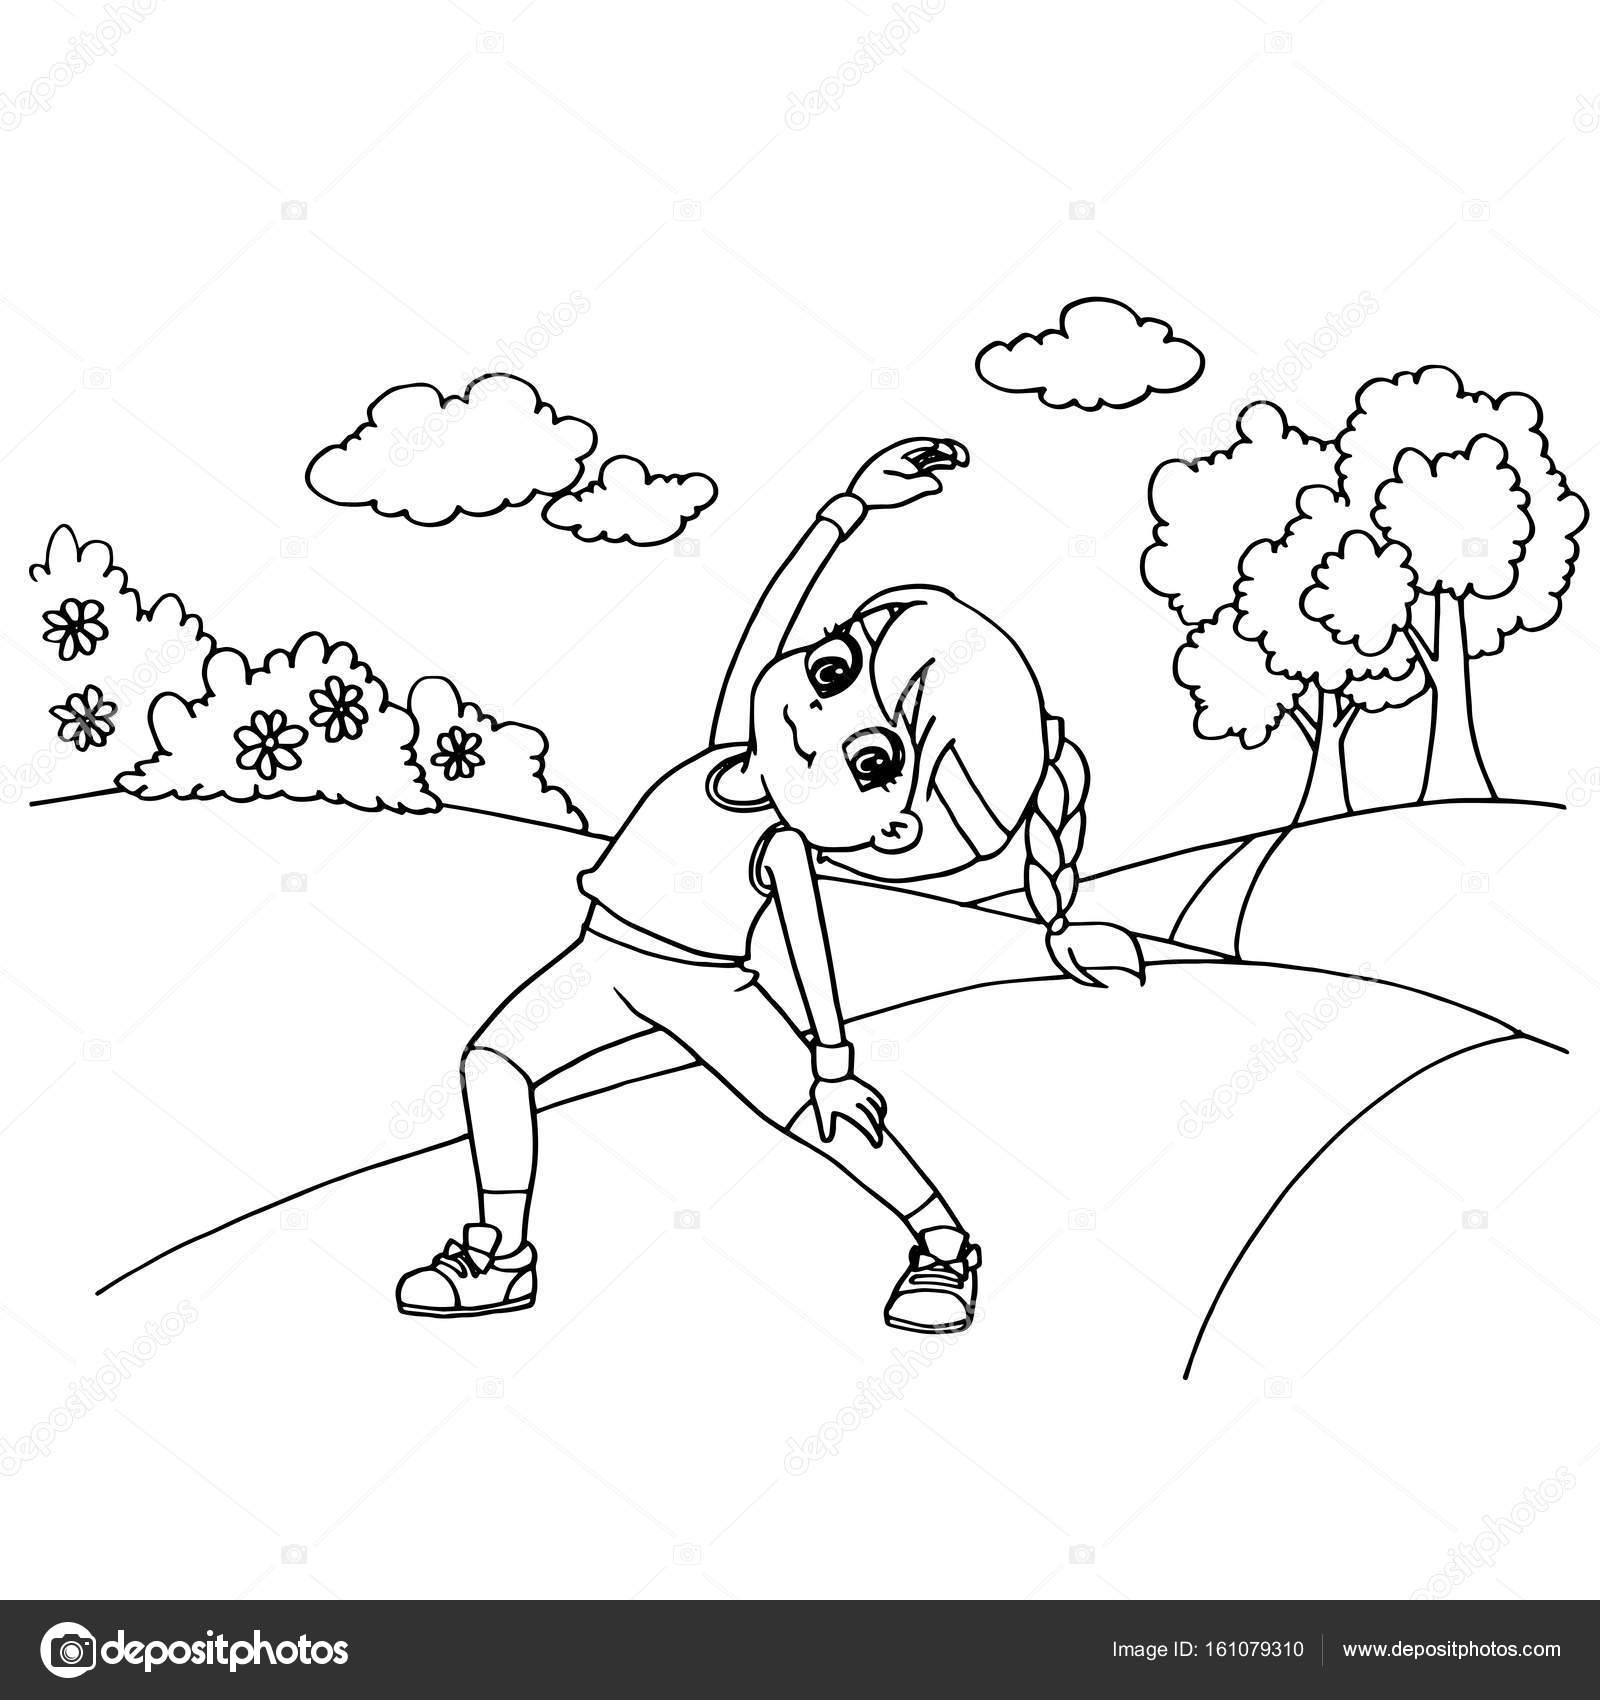 Exercising Drawing at GetDrawings | Free download